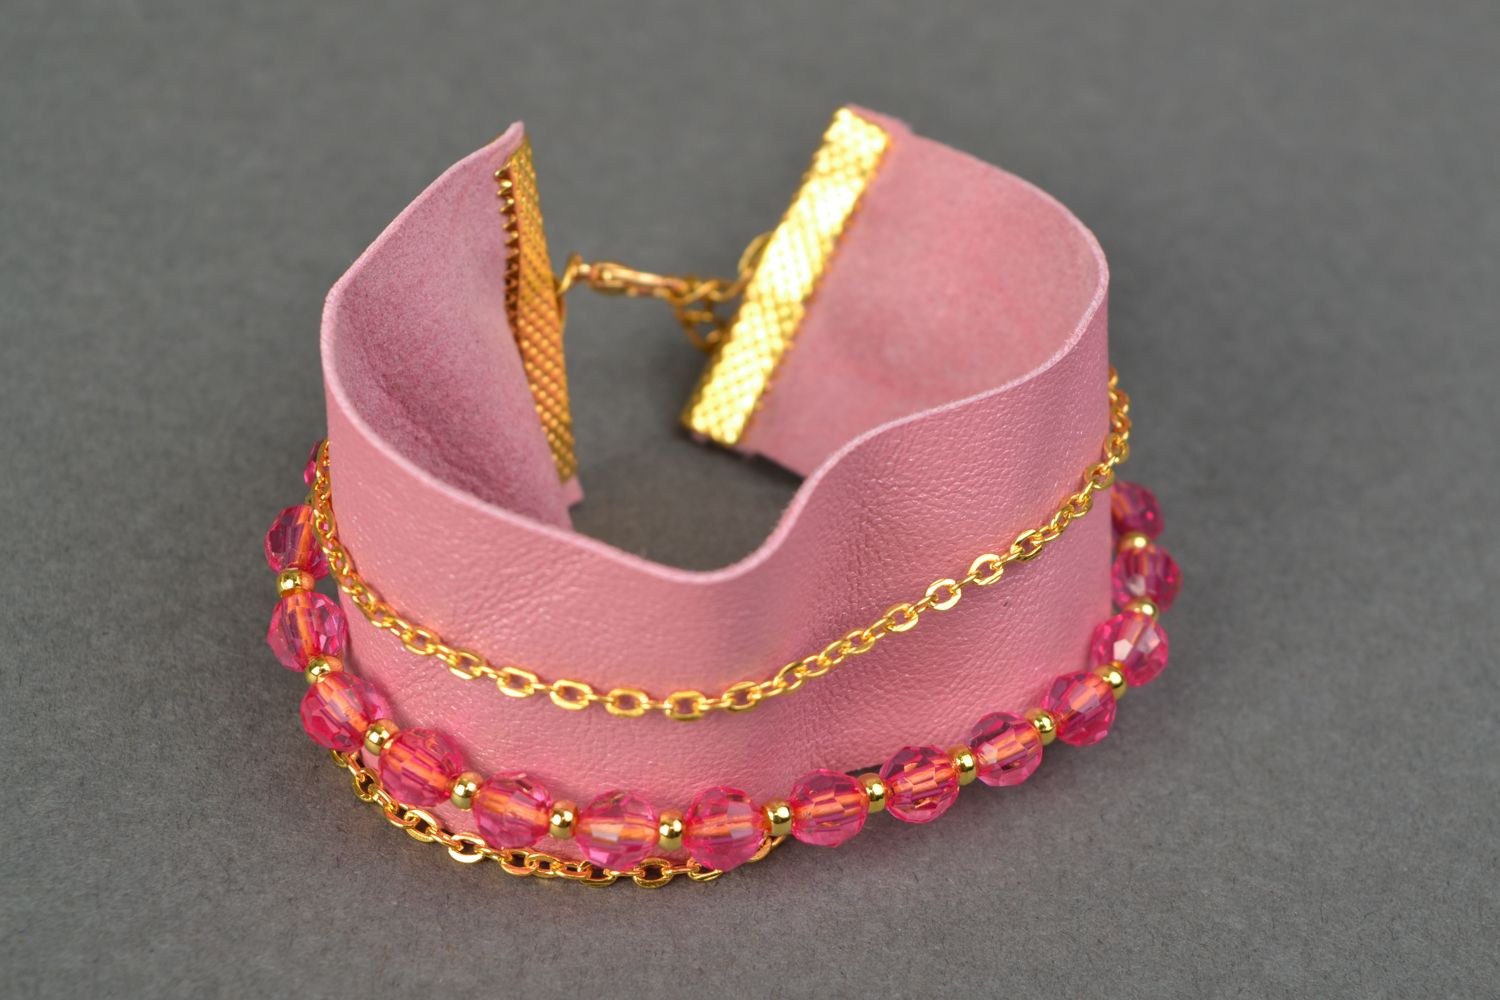 Rosa Armband aus Leder und Ketten foto 1